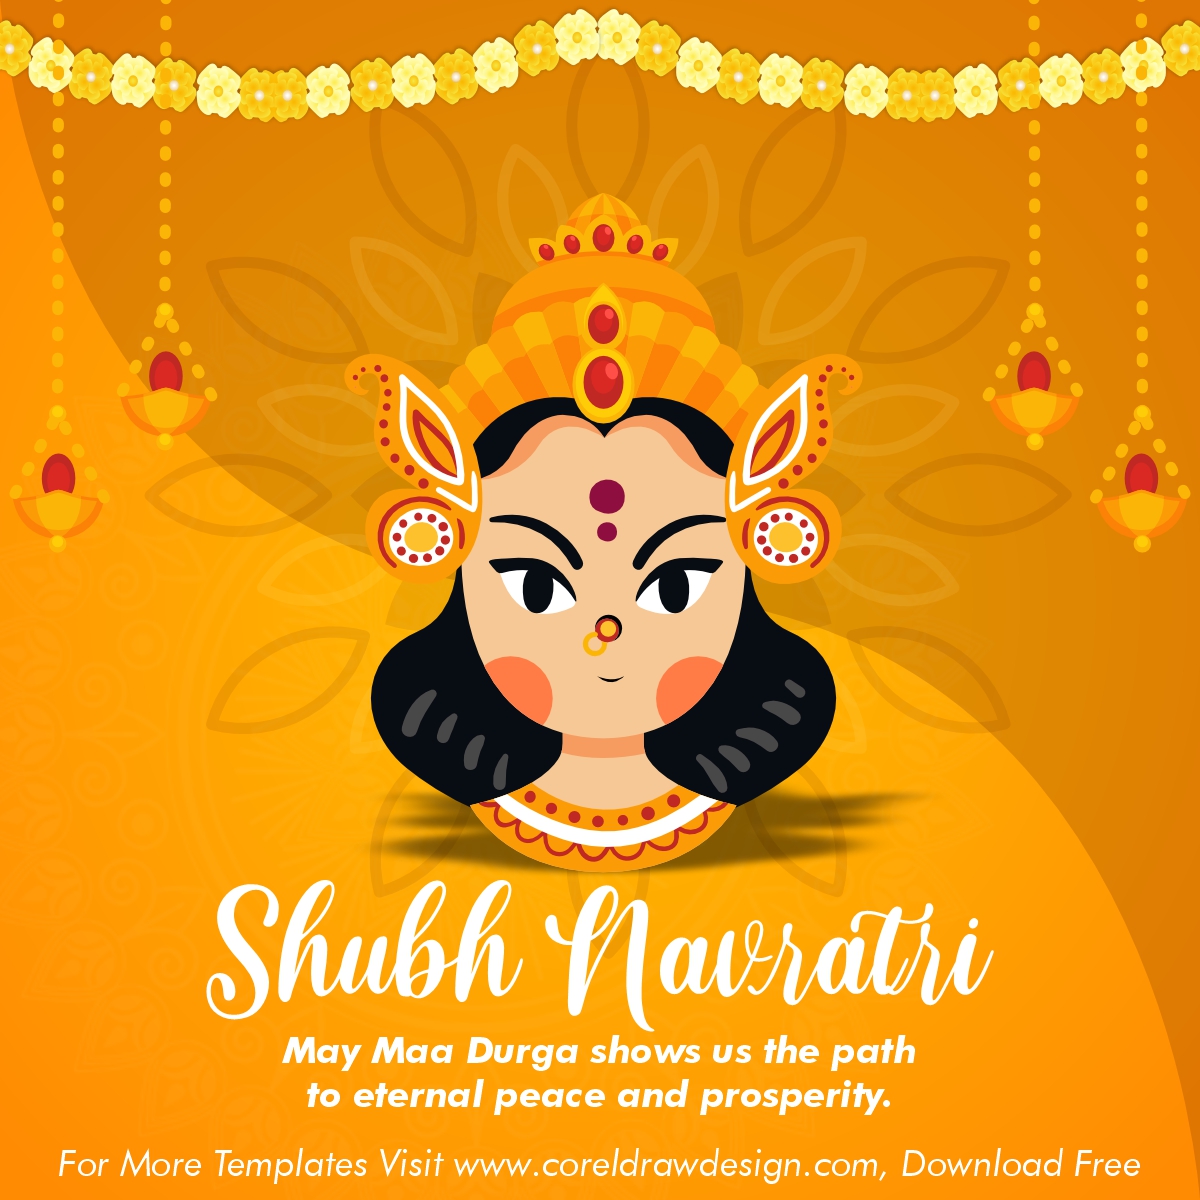 Maa Durga Happy Navratri Greeting Download Free From CorelDraw Design 2022